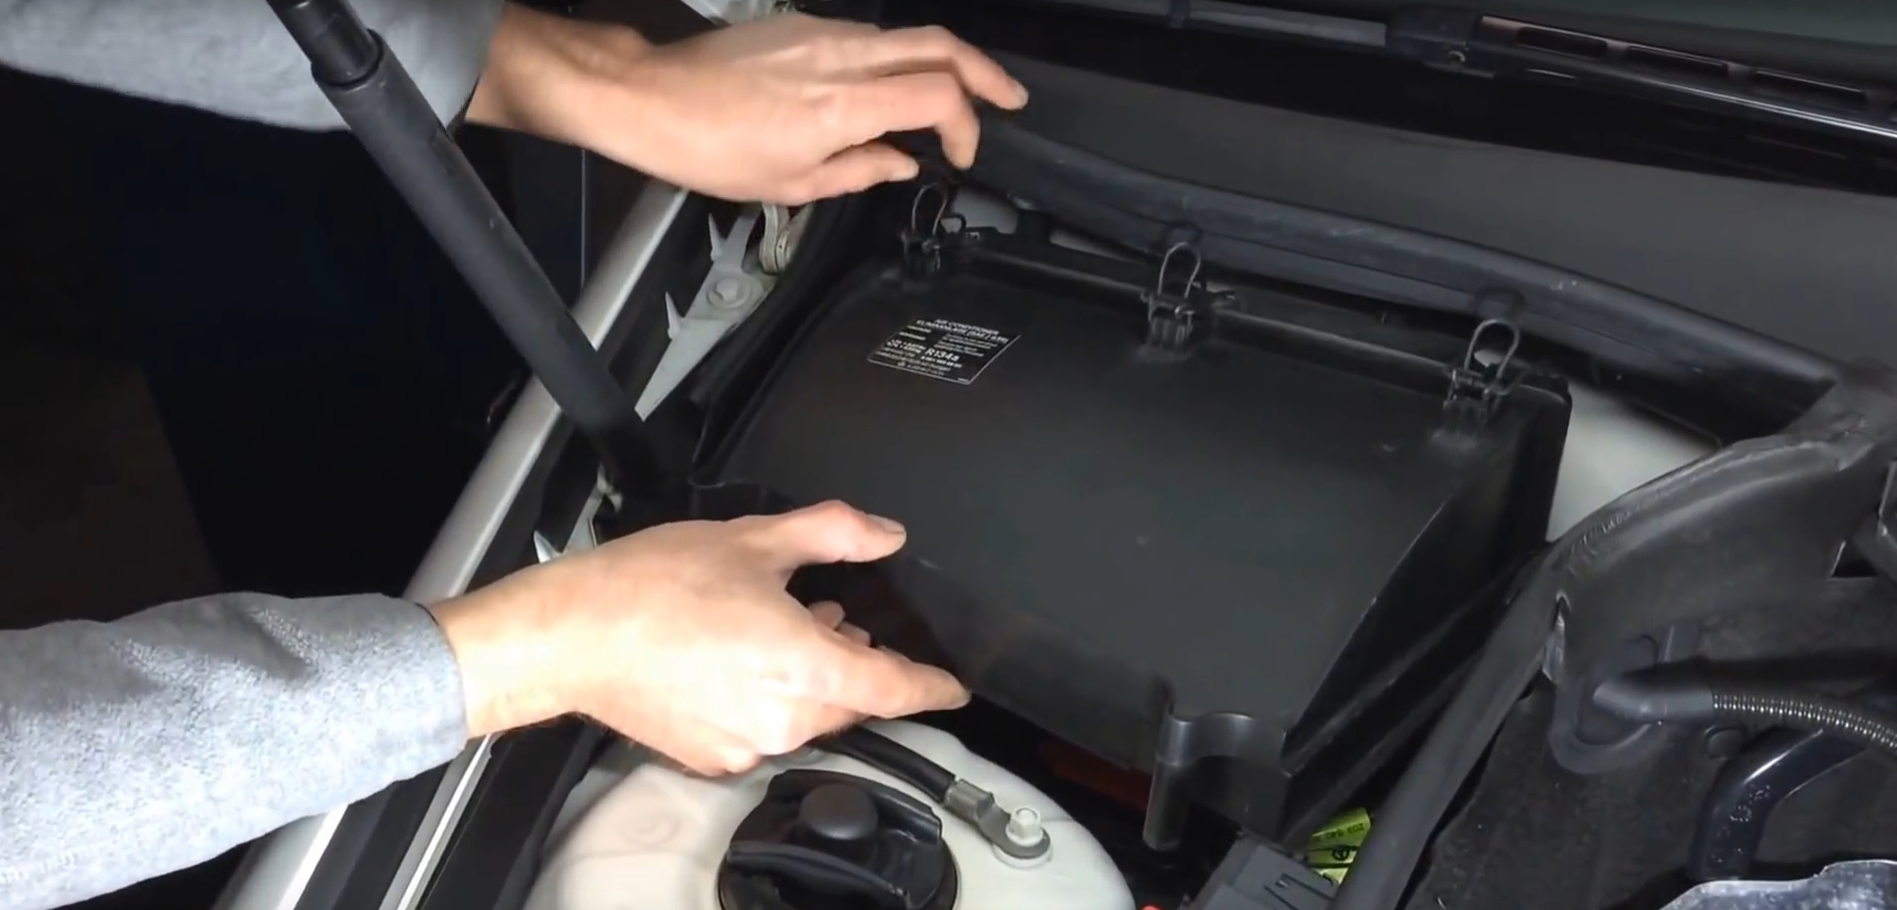 Снятие коробки фильтра воздуха салона Mercedes Benz W203